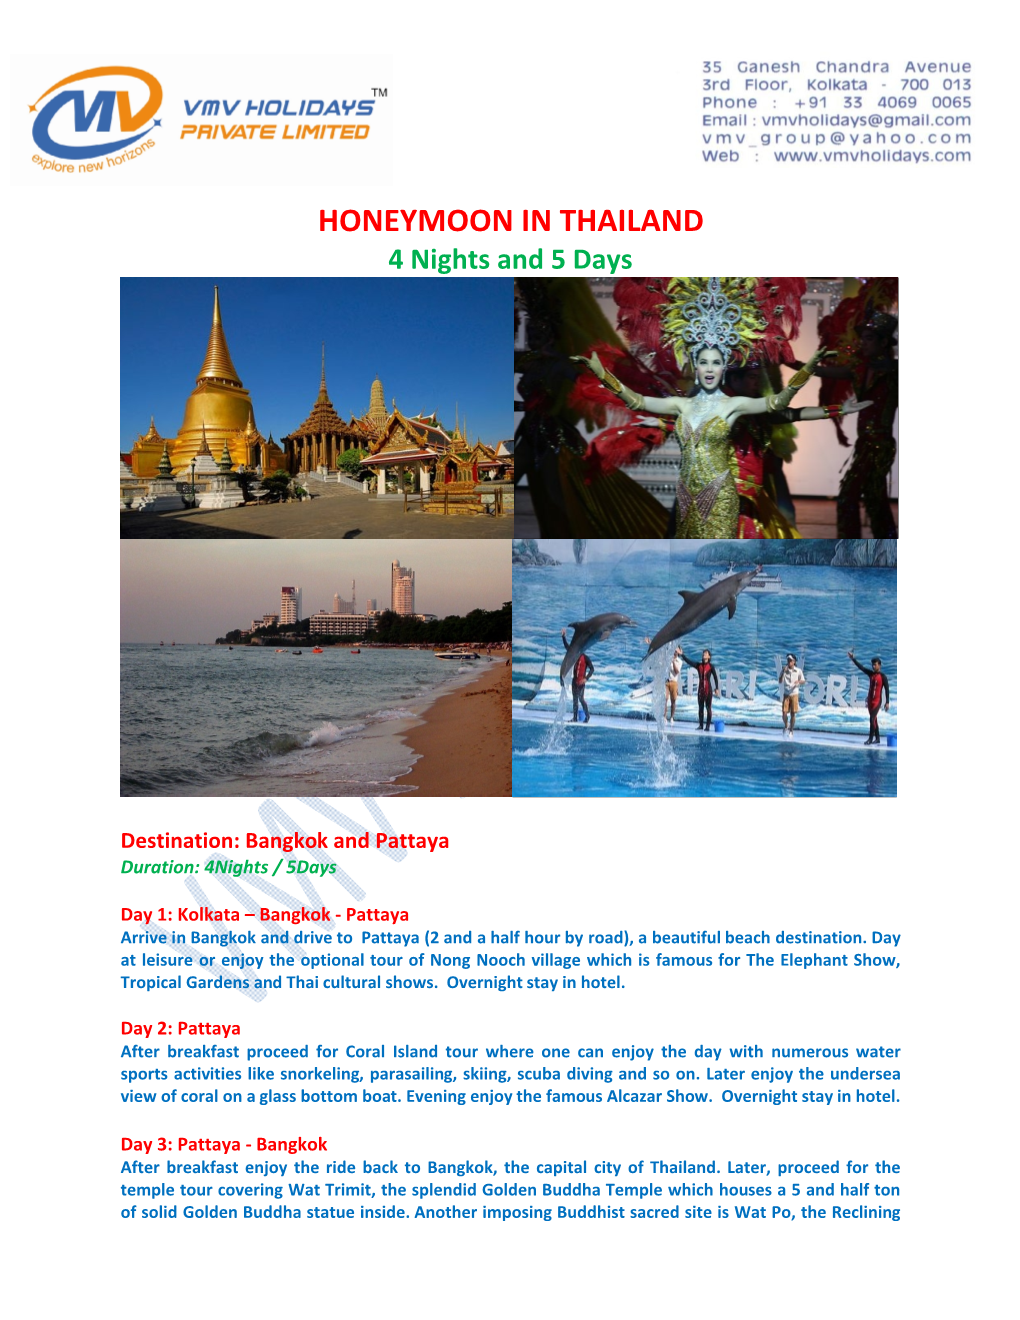 HONEYMOON in THAILAND 4 Nights and 5 Days